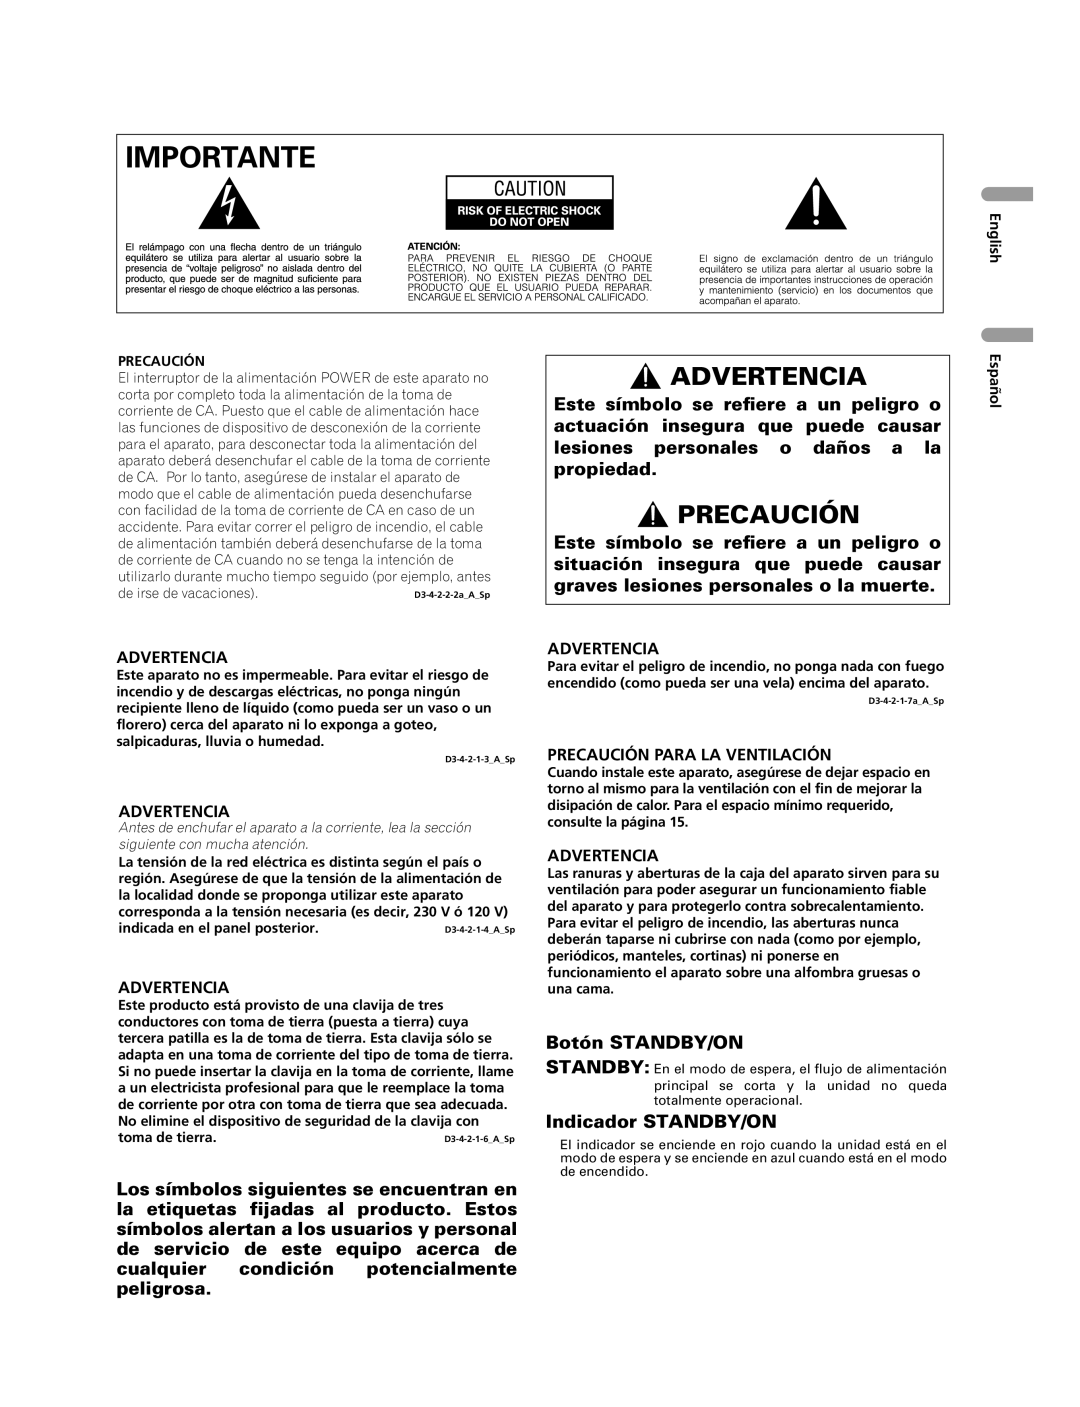 Pioneer PDP-507XG Advertencia, Precaución, cualquier condición potencialmente peligrosa, Botón STANDBY/ON, English Español 